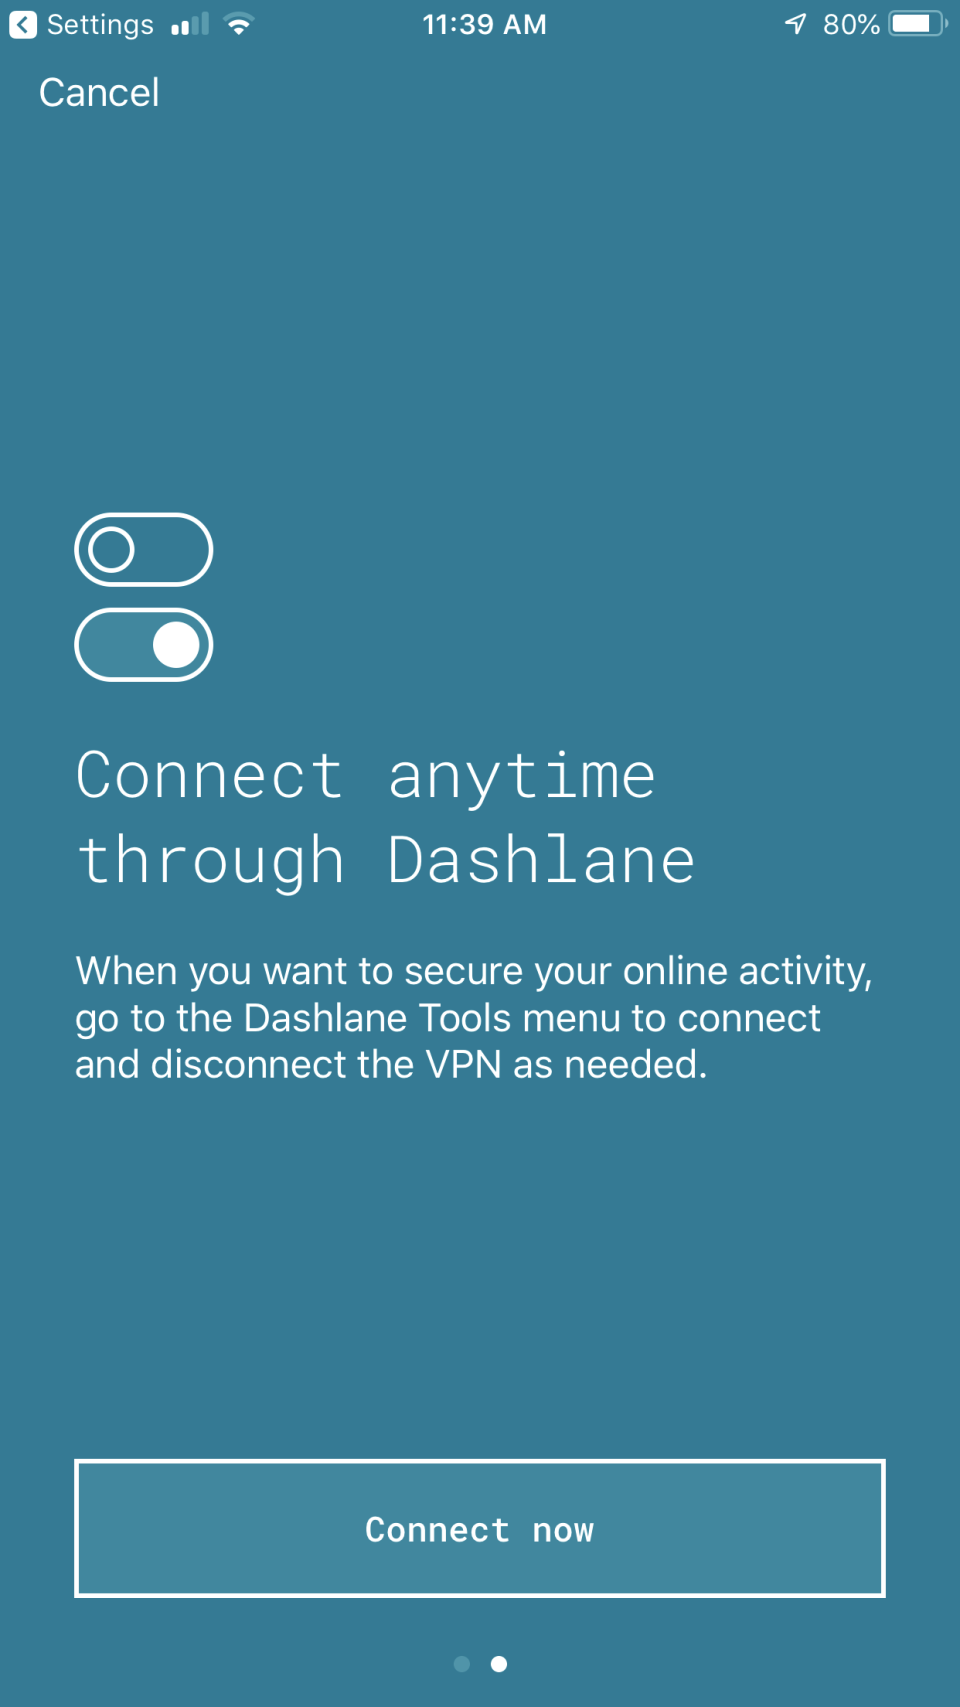 Dashlane's VPN feature